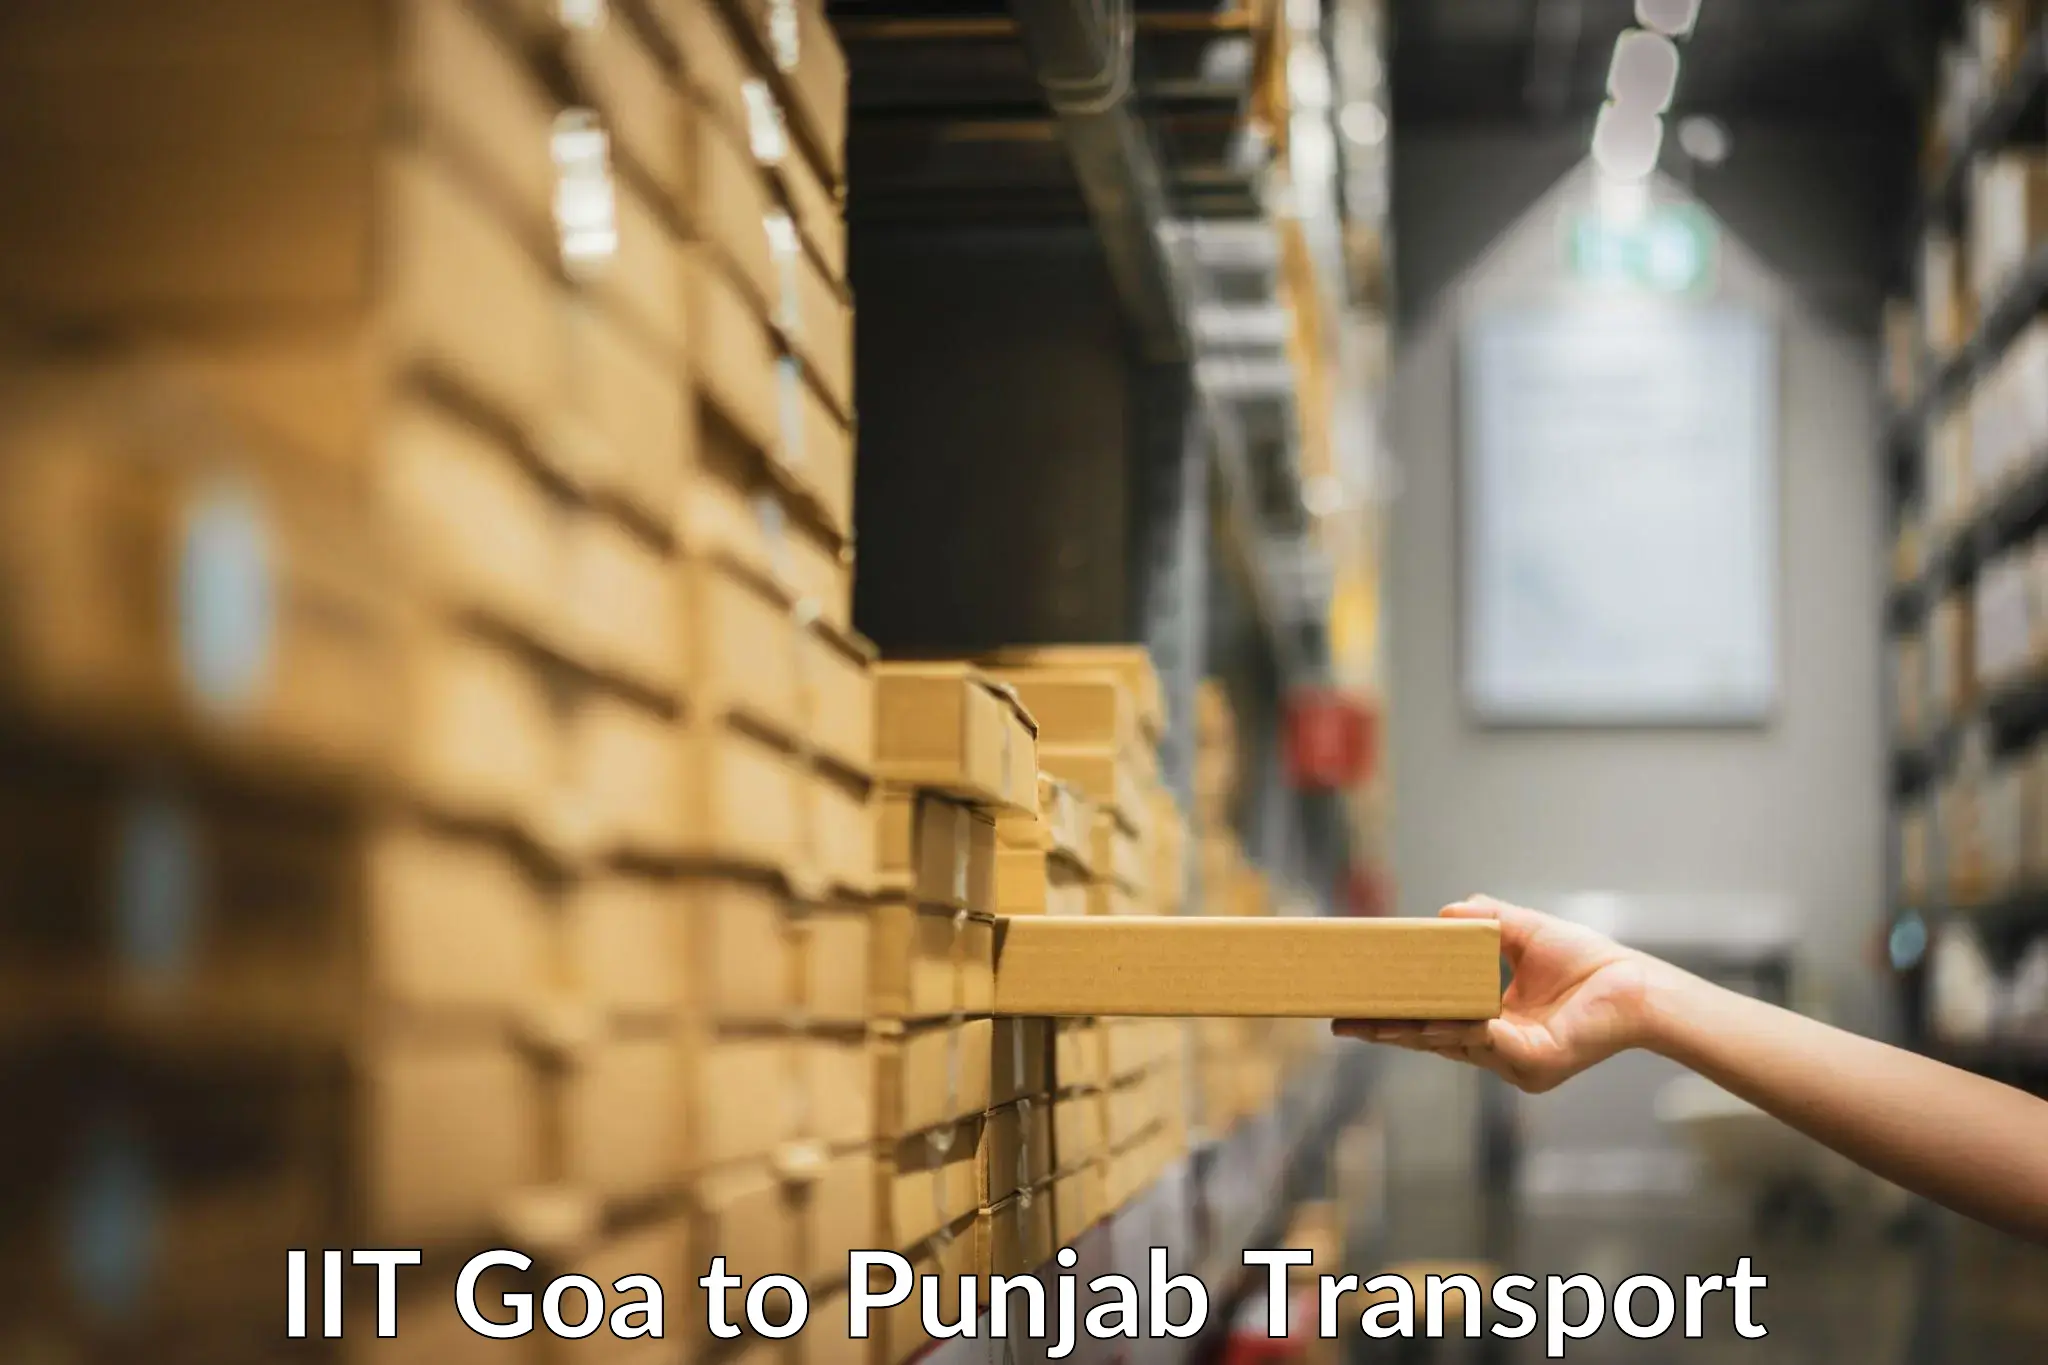 Container transport service IIT Goa to Dinanagar